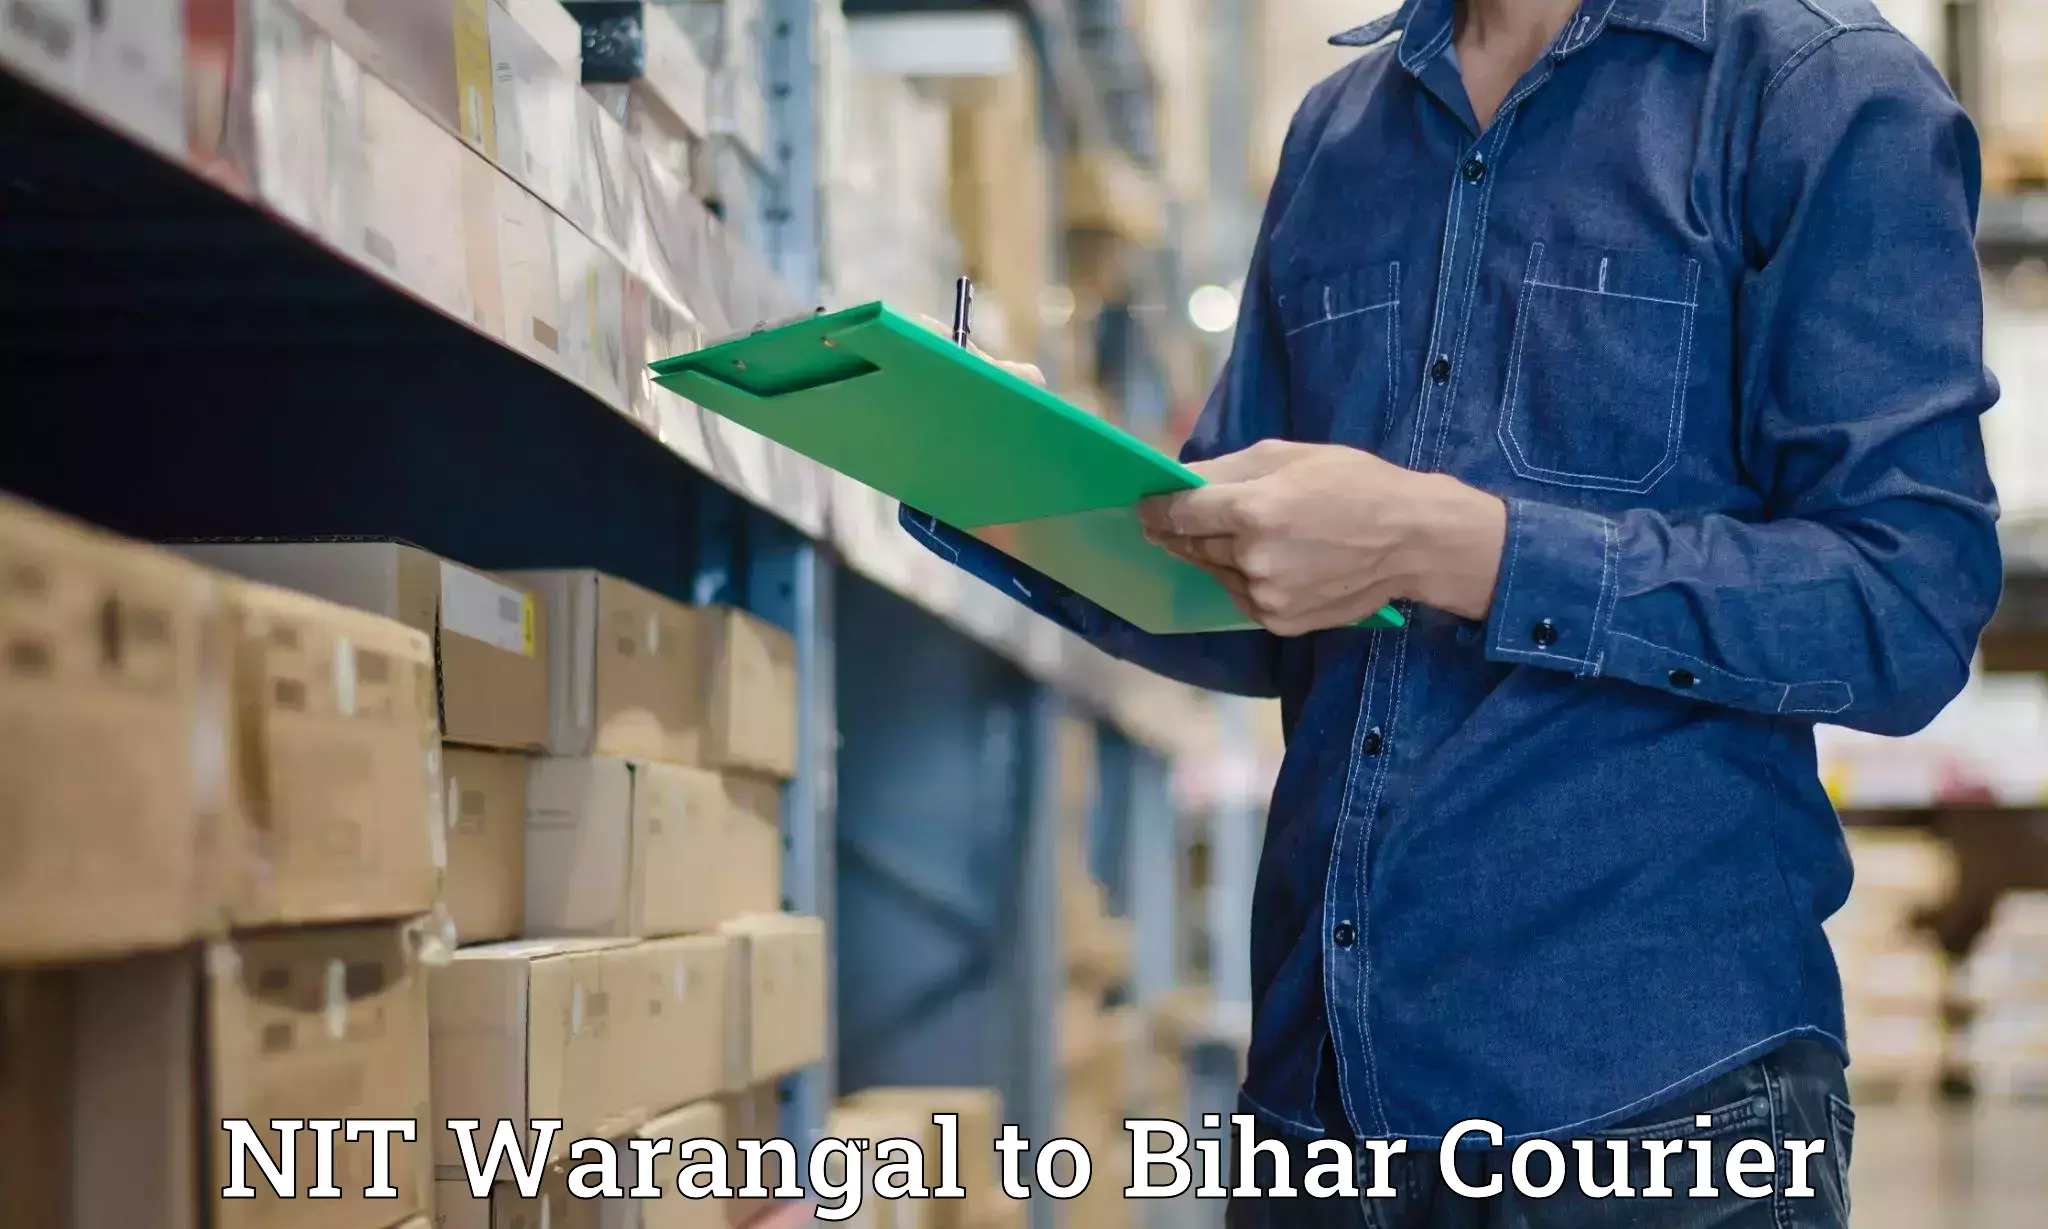 User-friendly courier app NIT Warangal to Bihar